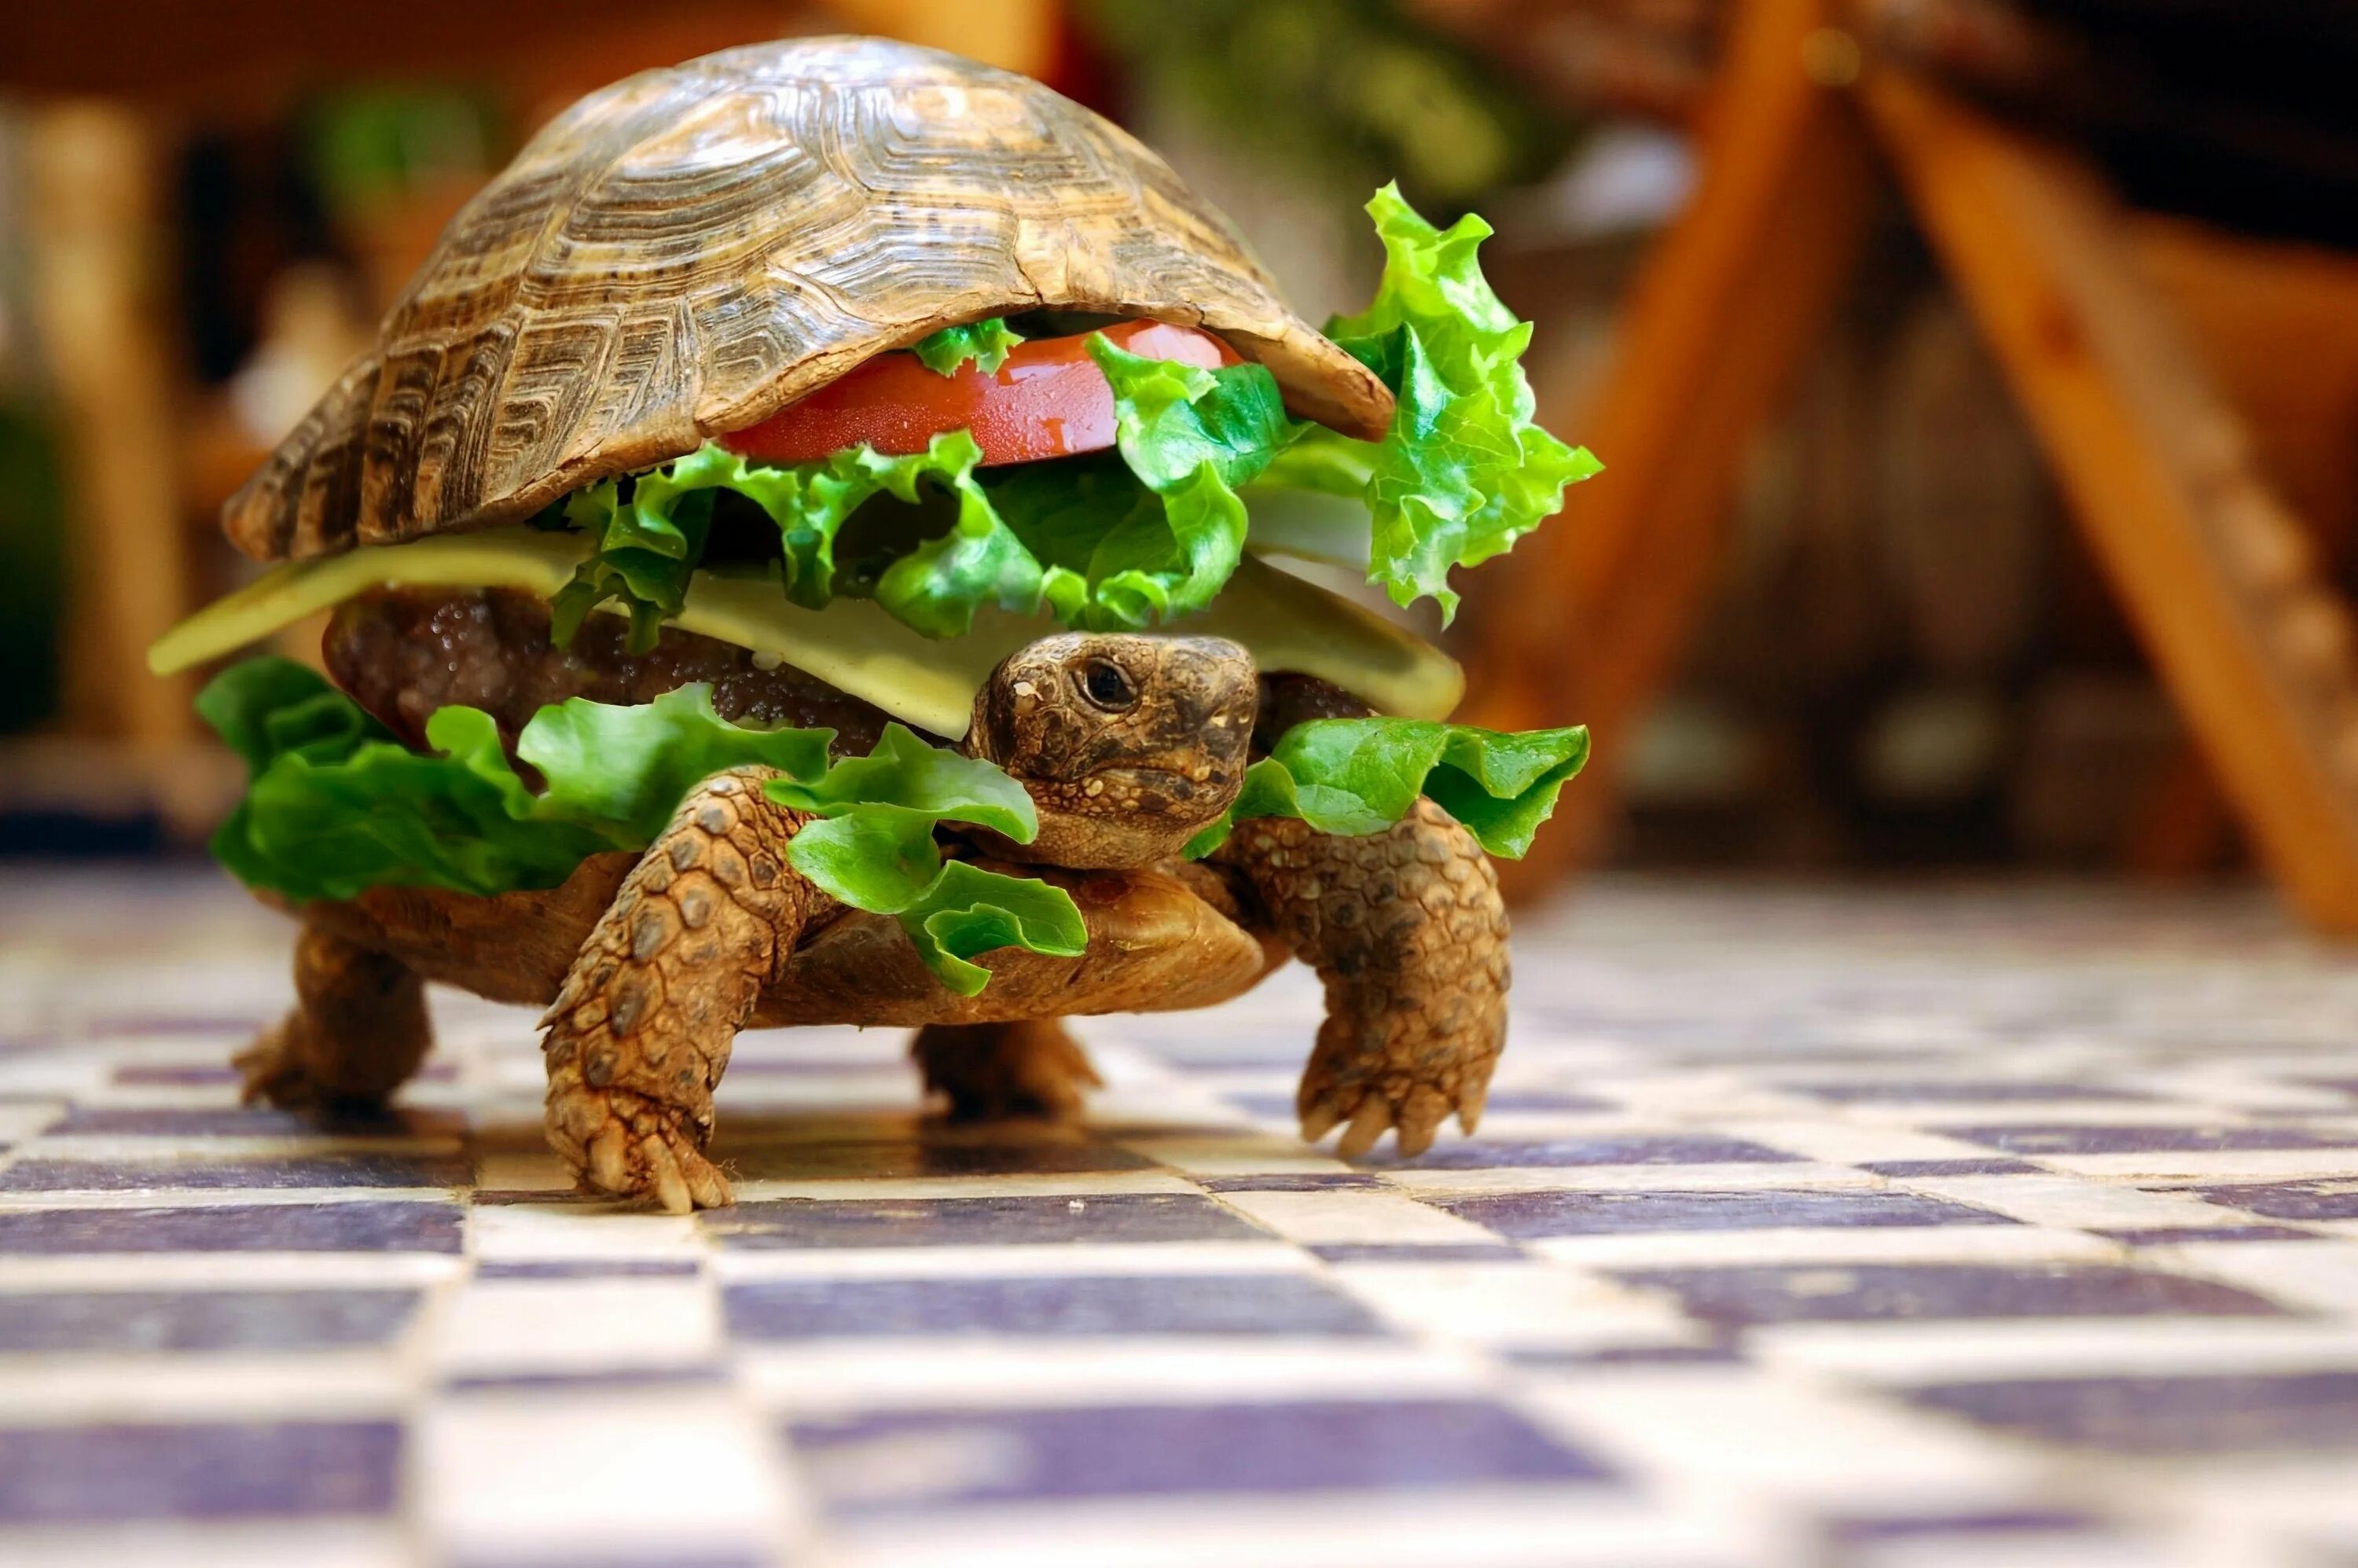 Черепаха бутерброд. Картинки на рабочий стол прикольные. Смешная черепаха. Черепаха гамбургер.